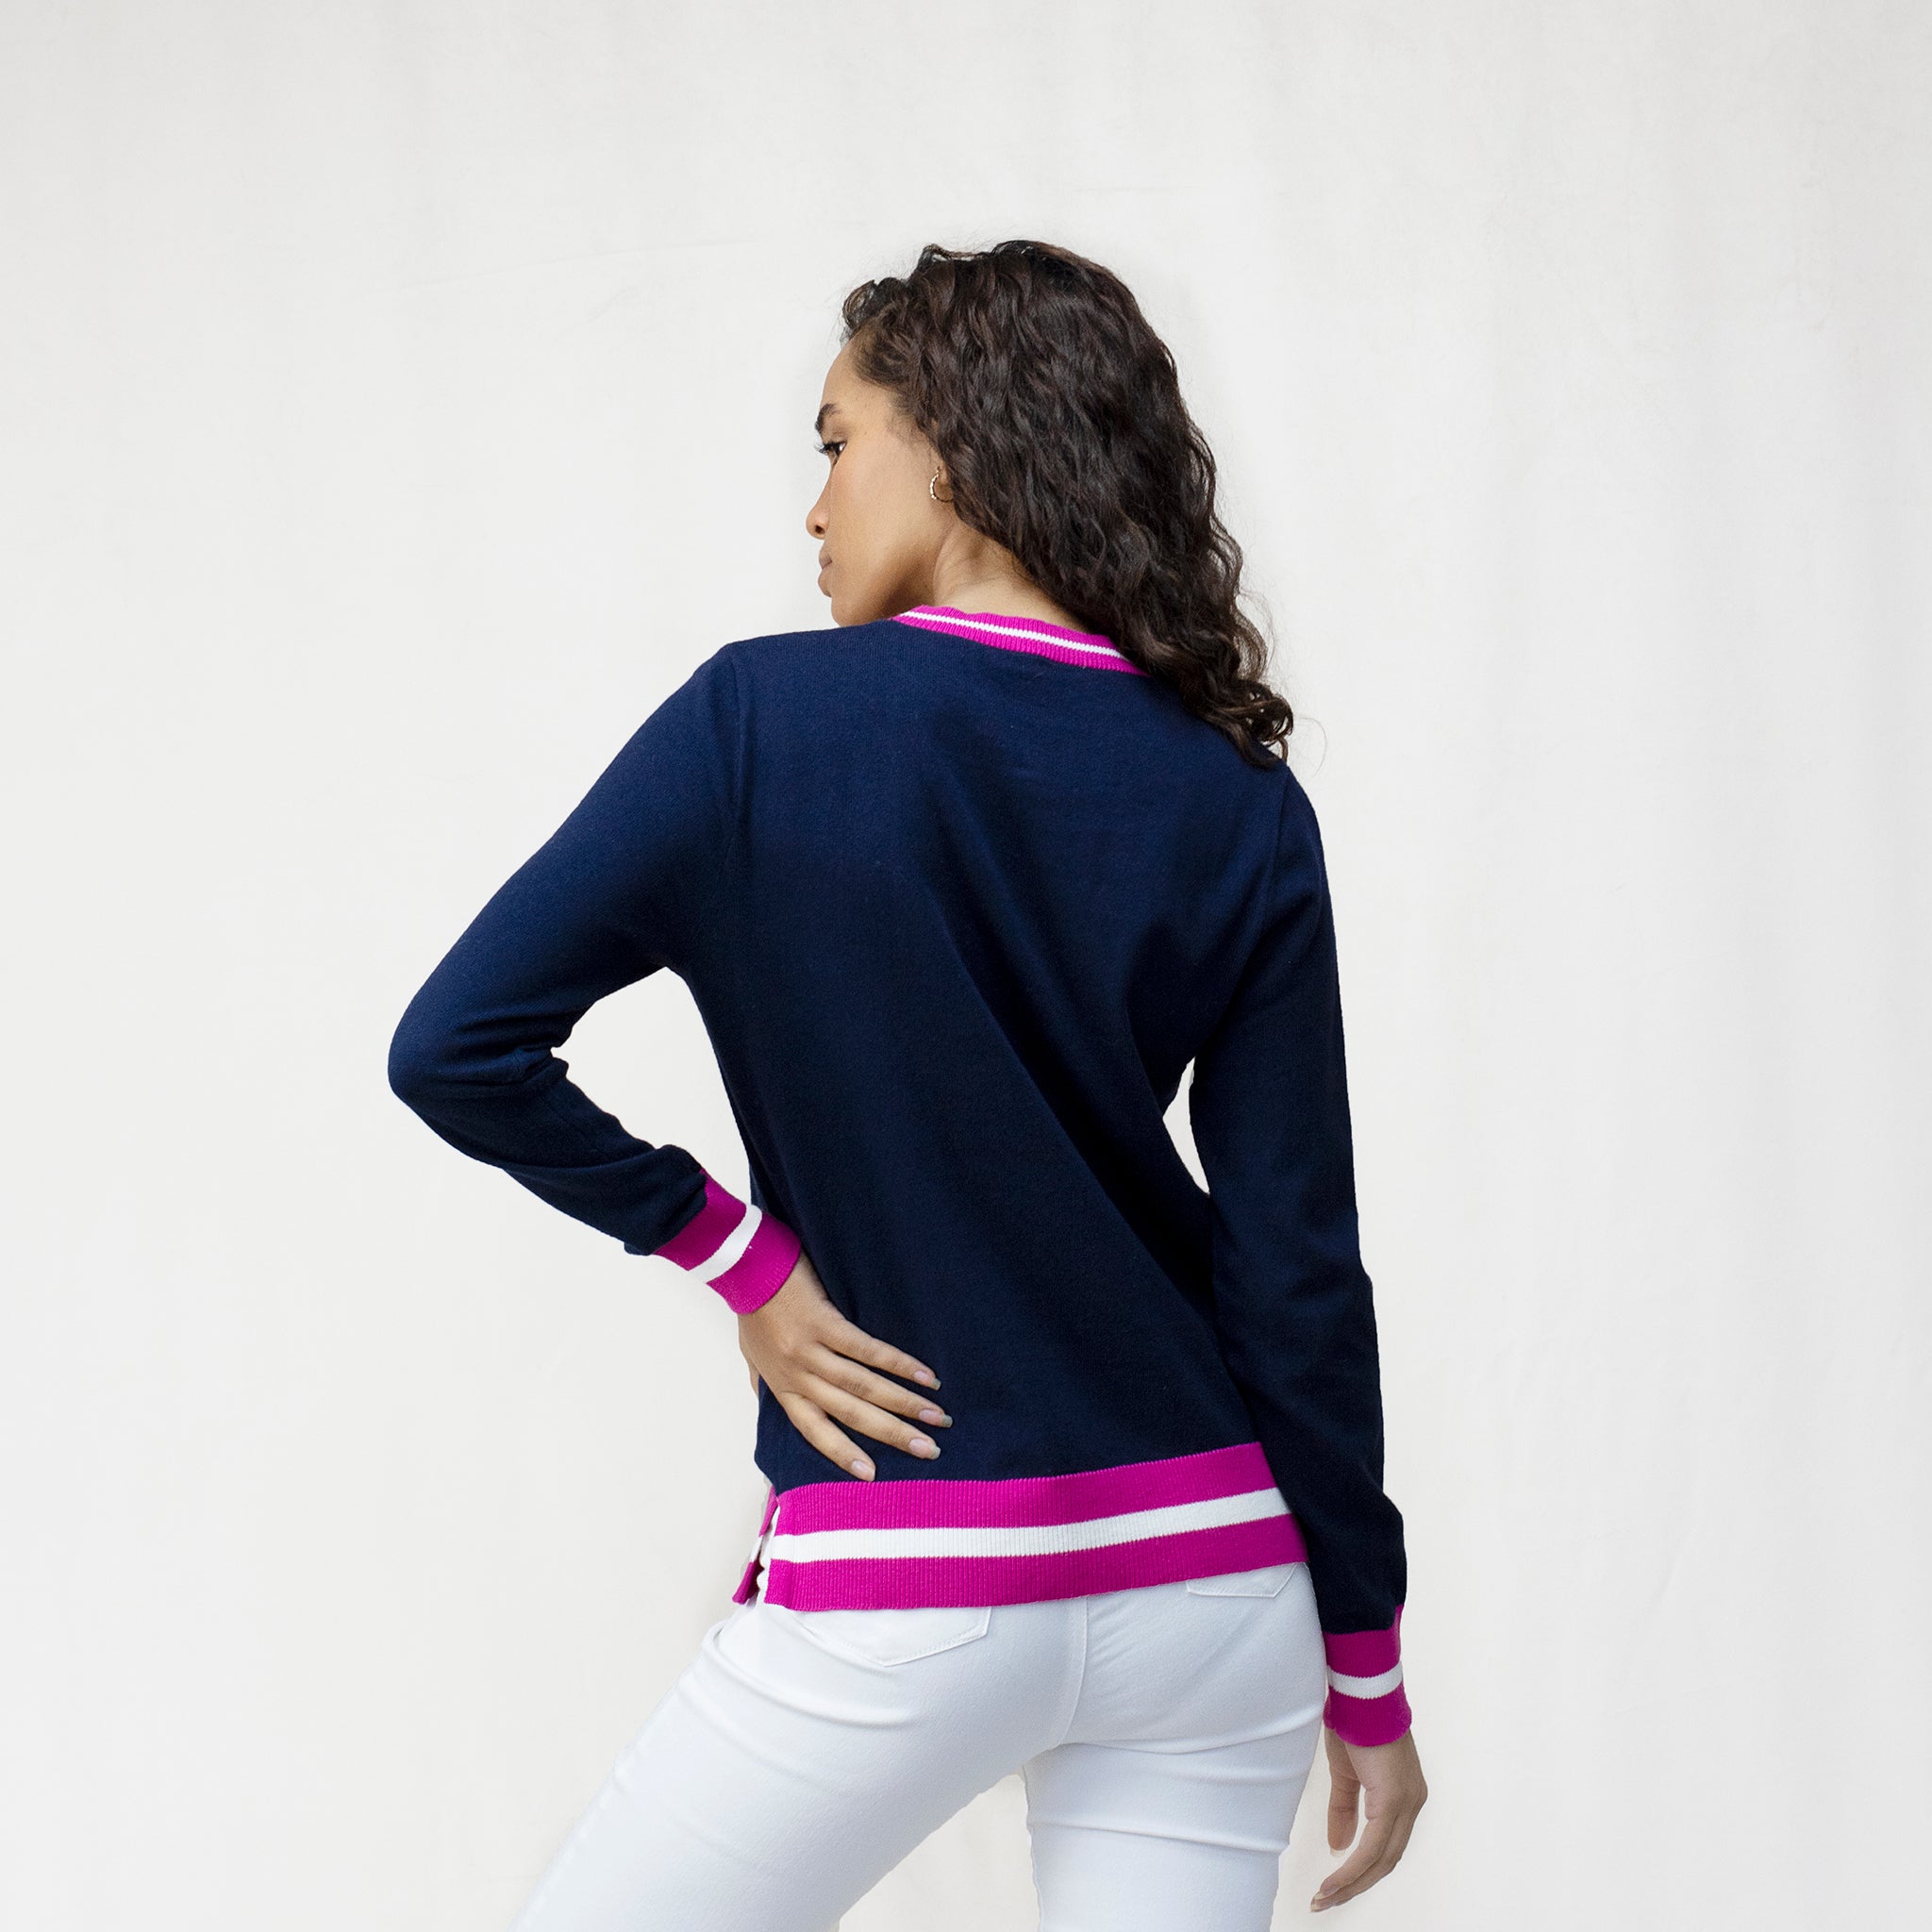 Women's Contrast Crew Neck Jumper in Cotton Cashmere blend.